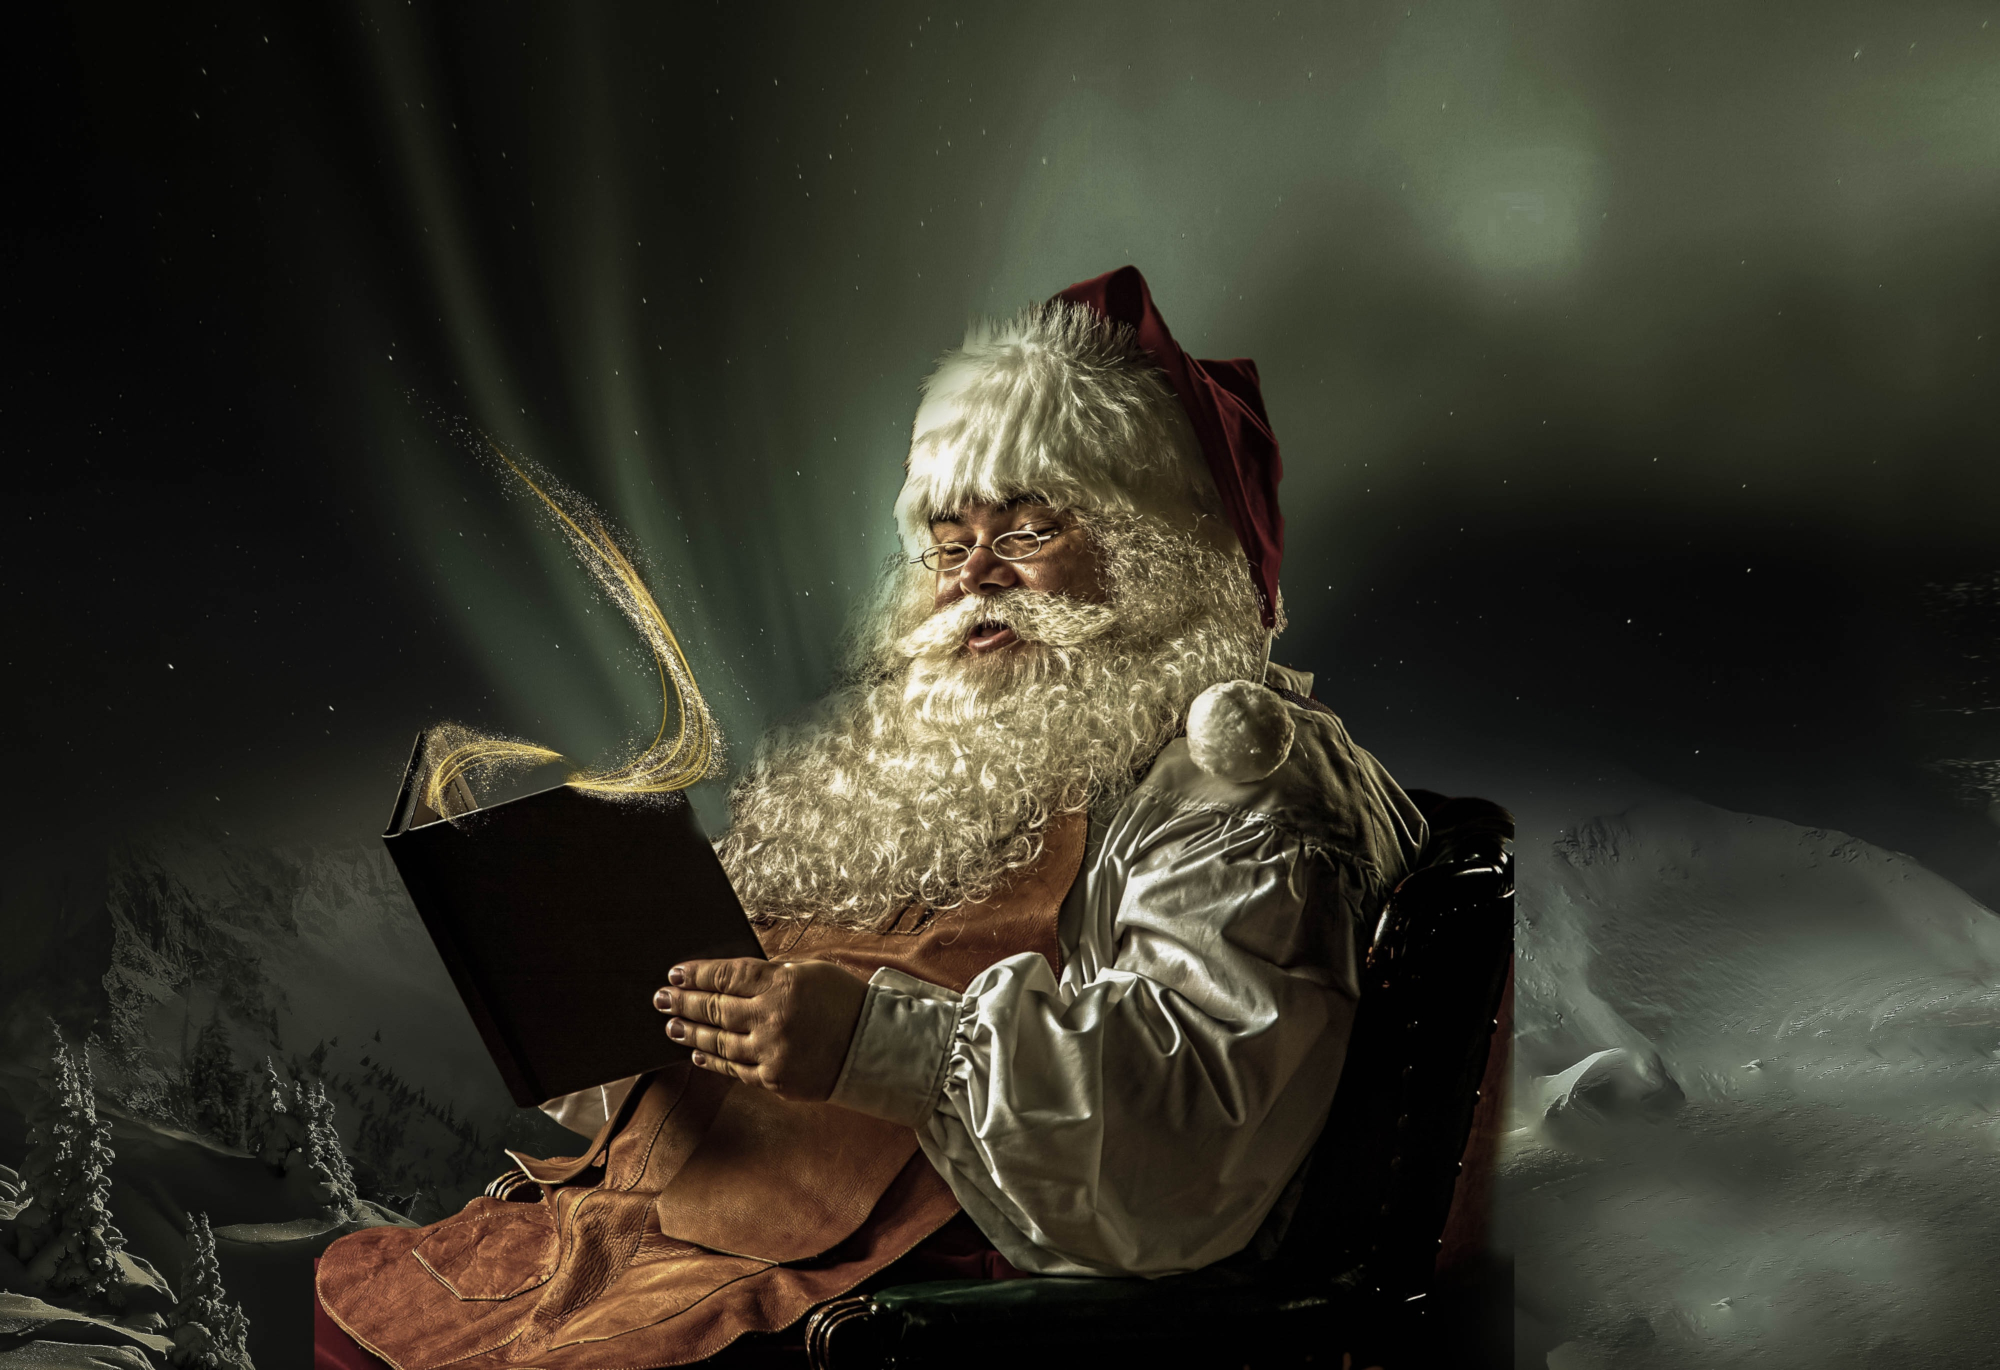 Download mobile wallpaper Christmas, Holiday, Santa for free.